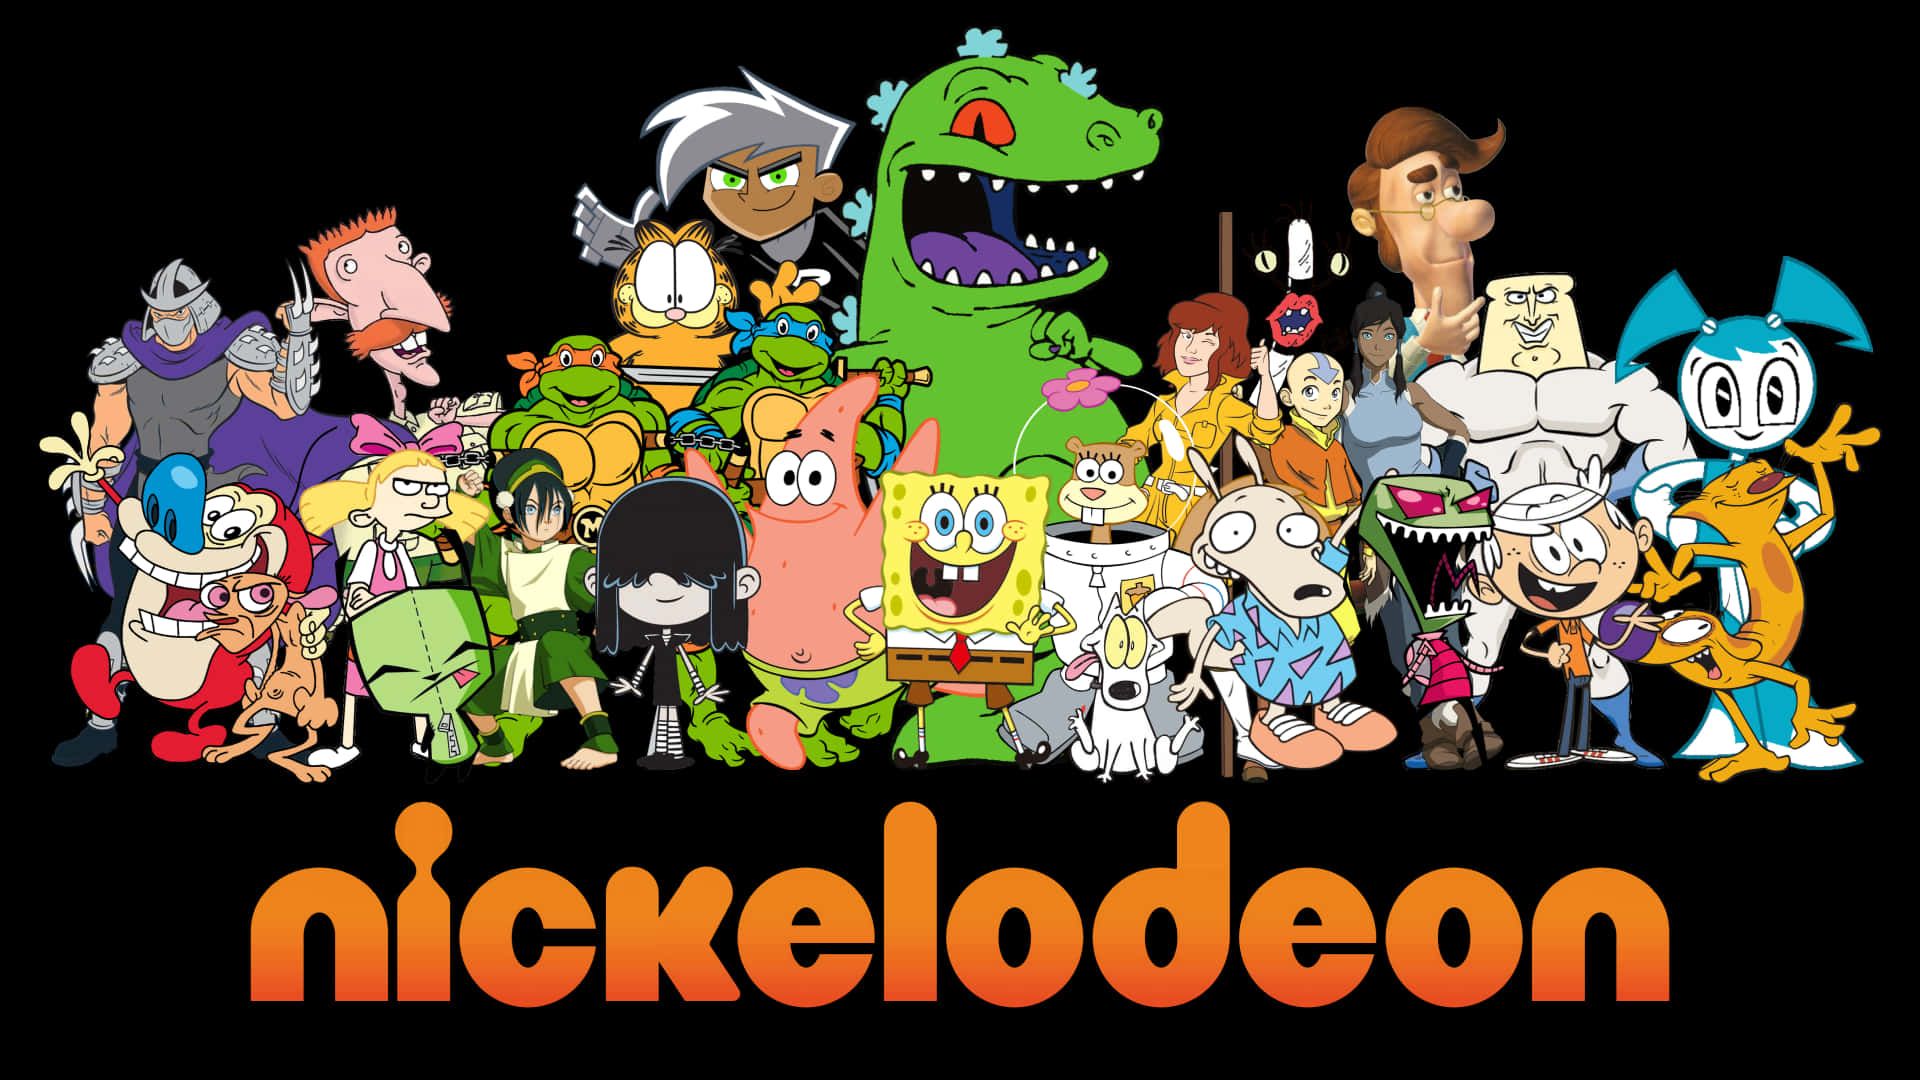 Nickelodeon Wallpapers 4k Hd Nickelodeon Backgrounds On Wallpaperbat 